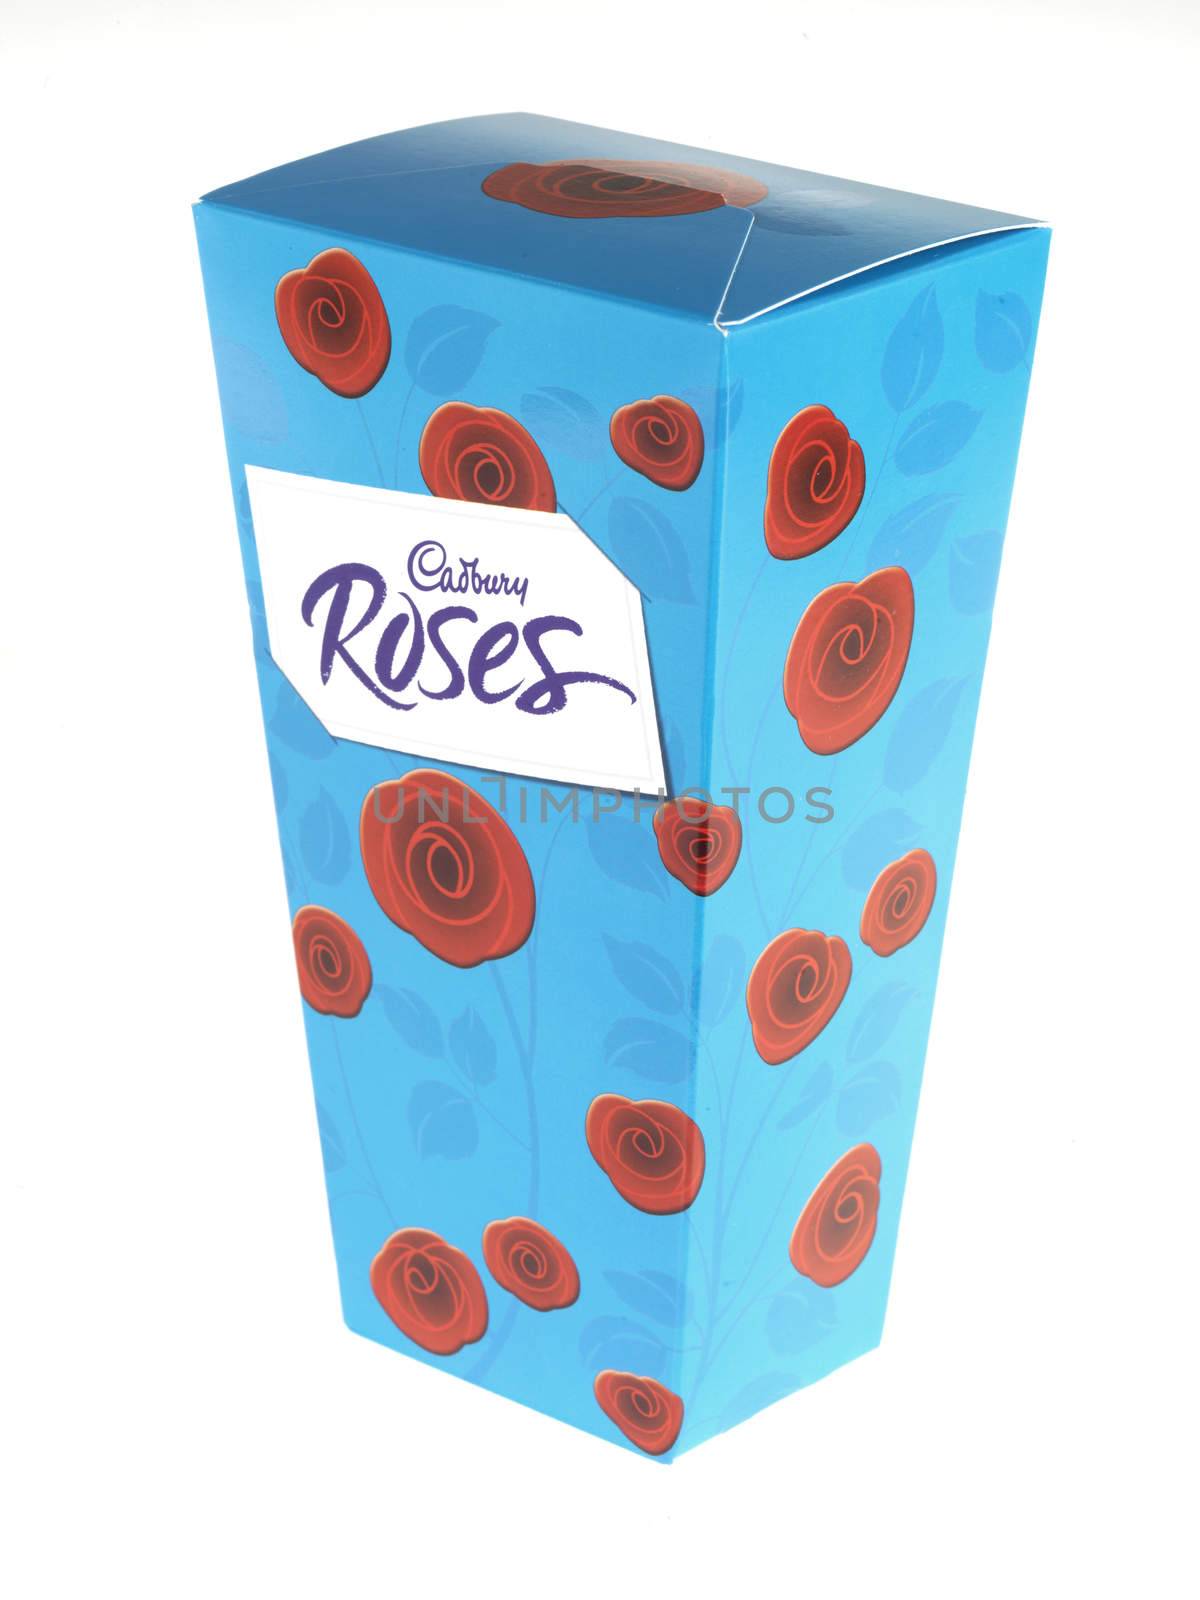 Box of Roses Chocolates by Whiteboxmedia